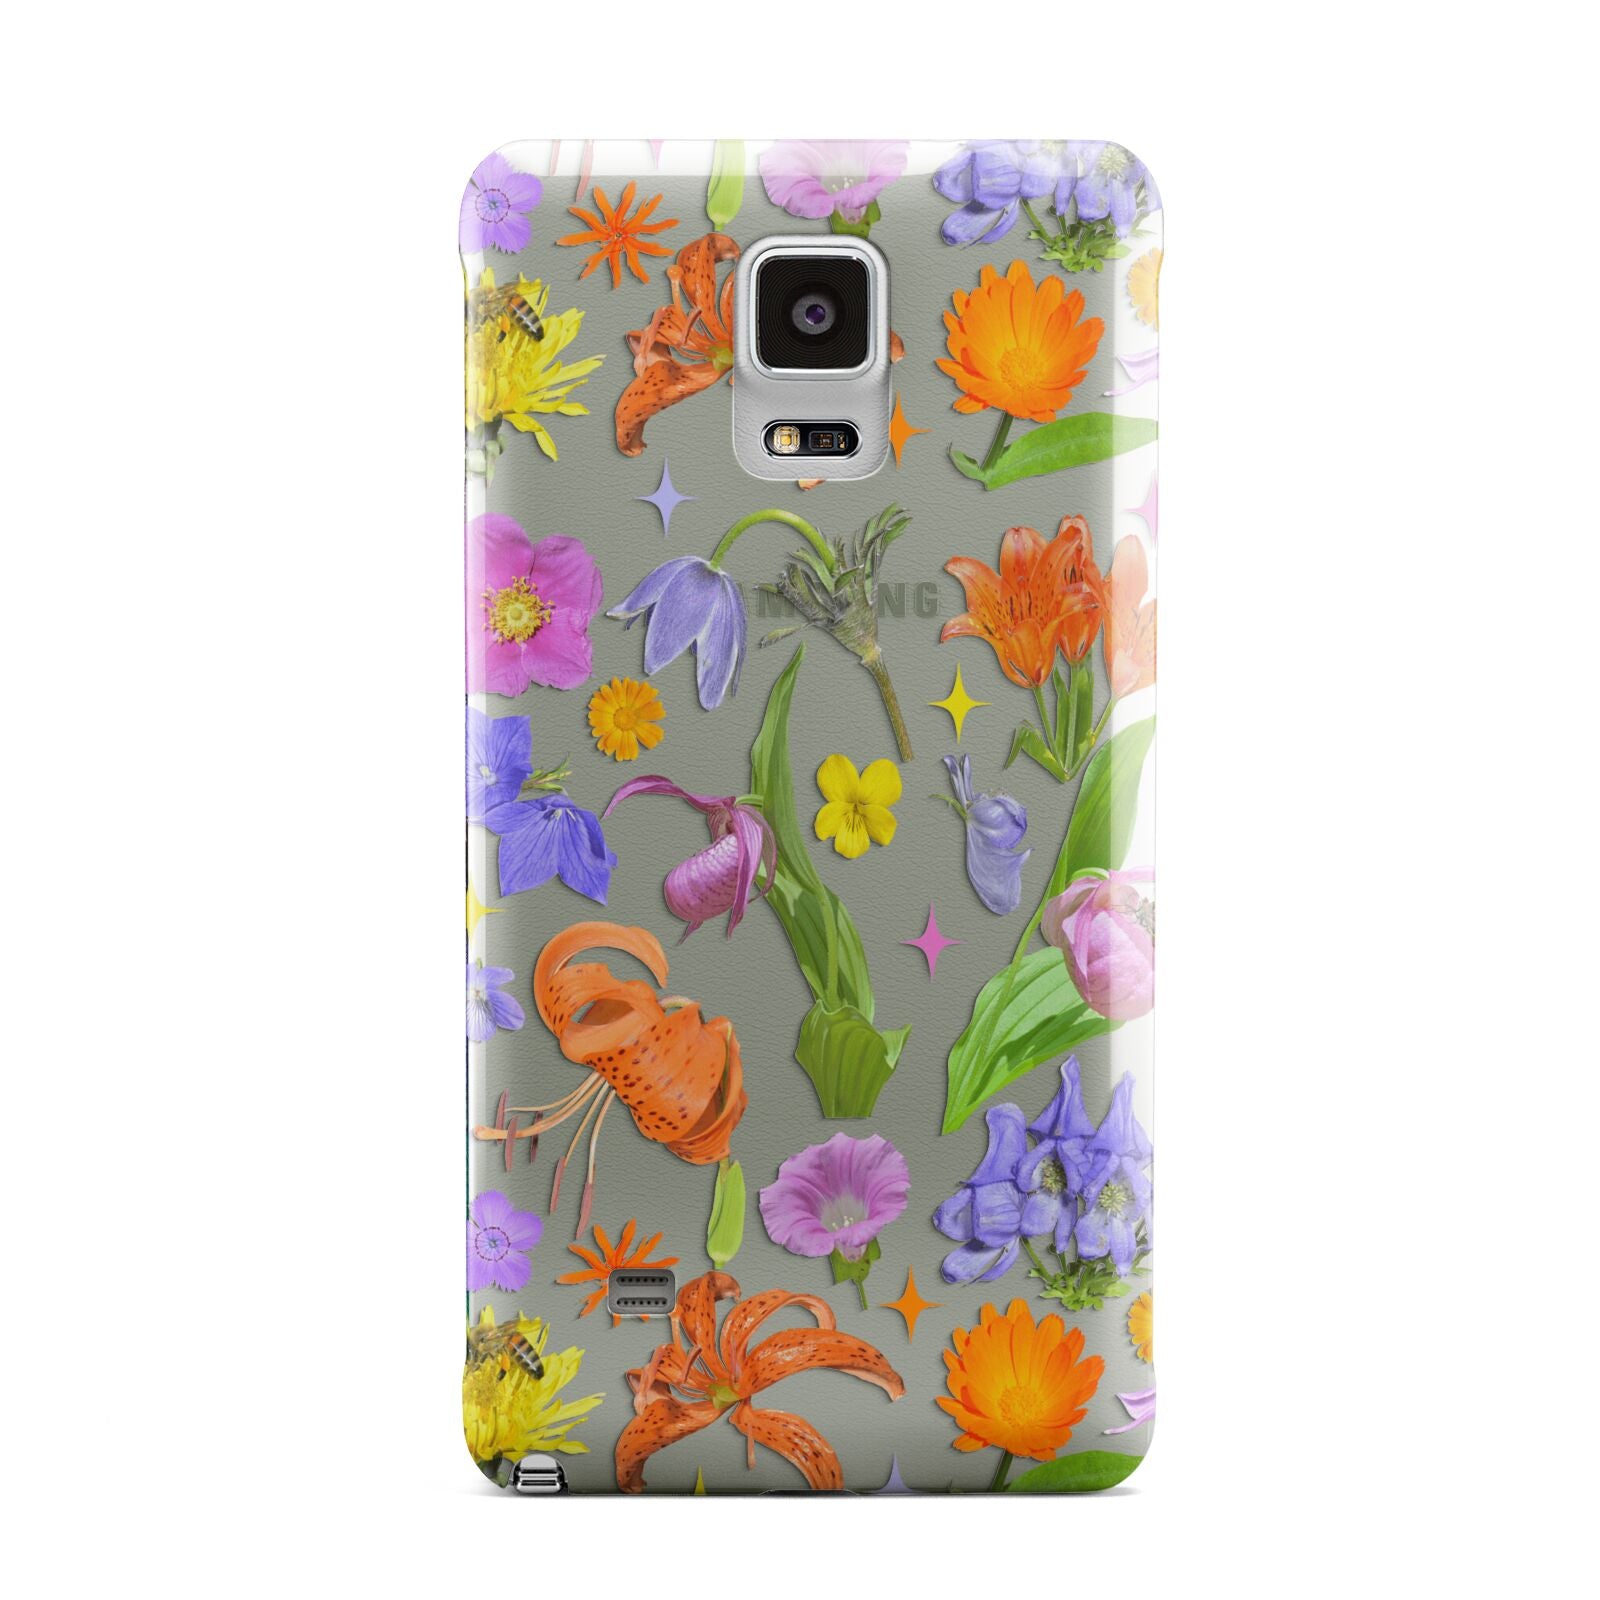 Floral Mix Samsung Galaxy Note 4 Case